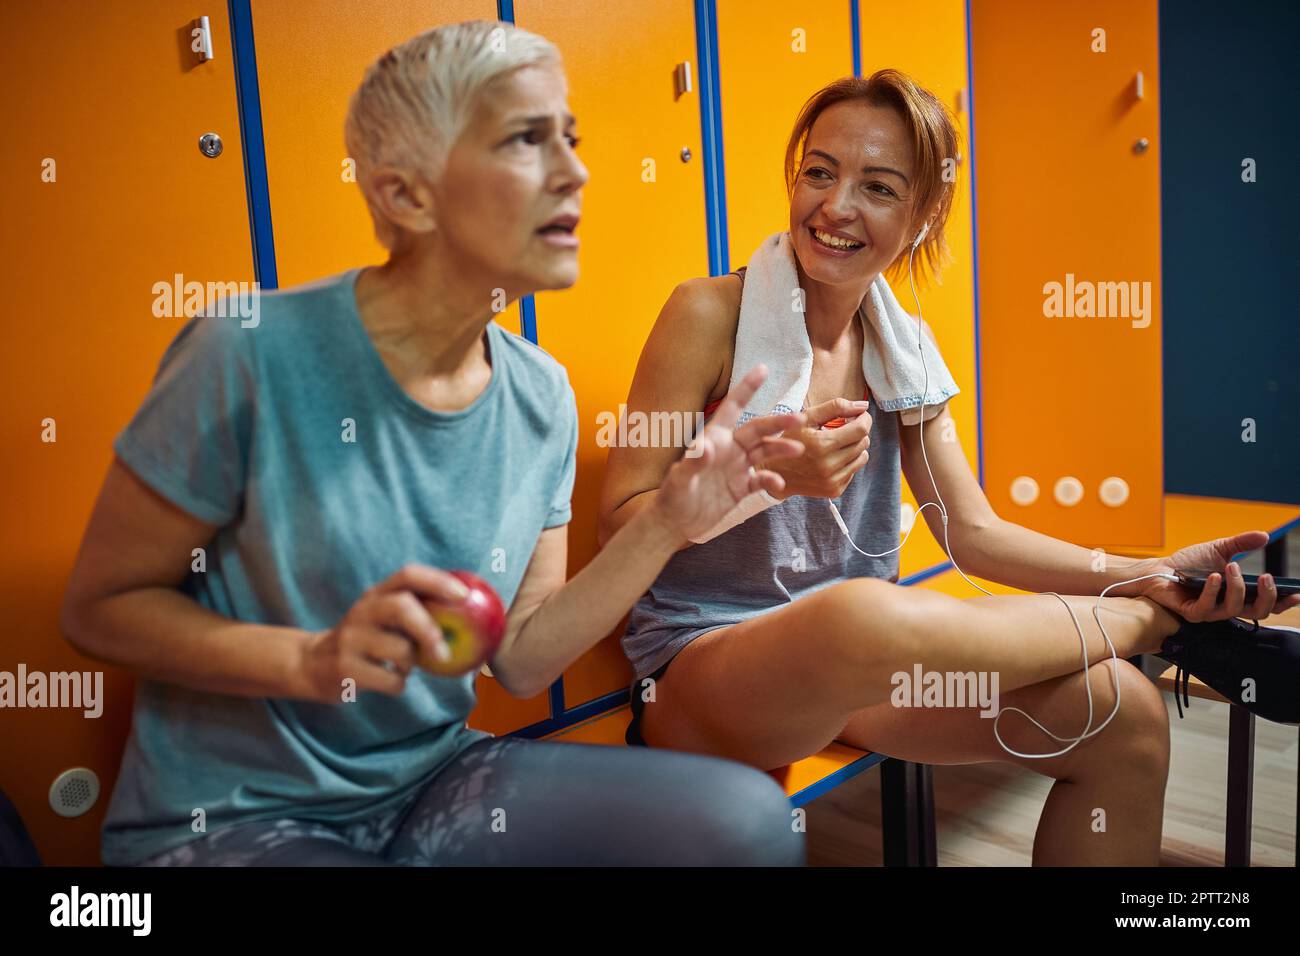 Senior woman and younger woman wearing sportswear having a joyful conversation in gym locker room. Stock Photo